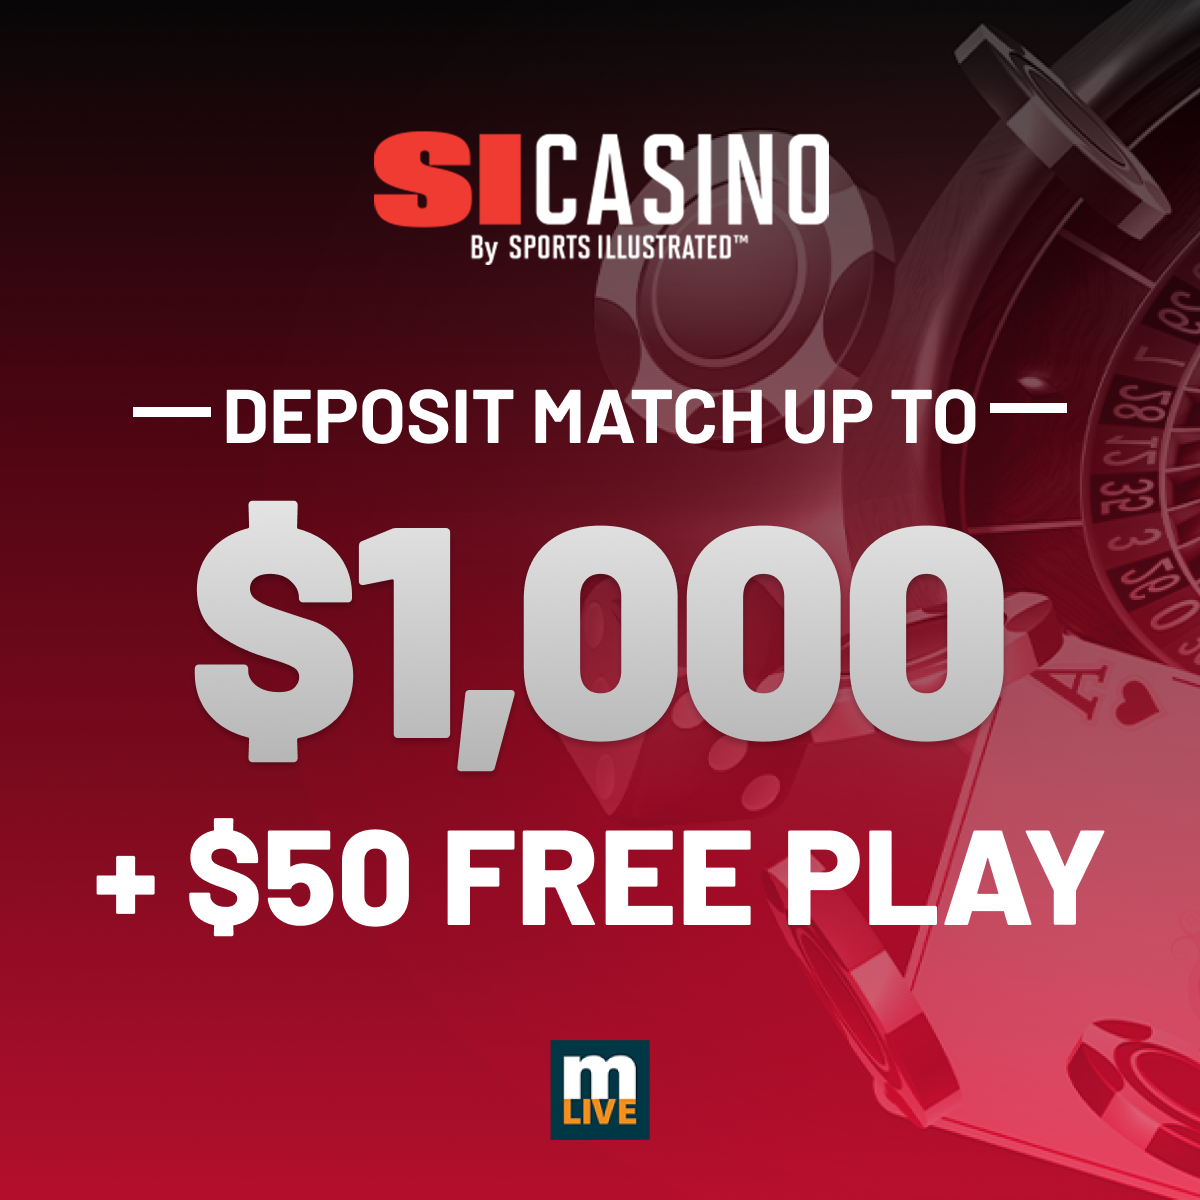 Caesars Palace Online Casino Promo Code: Use Code SLMLIVEGET for a 100%  deposit match up to $1,250 